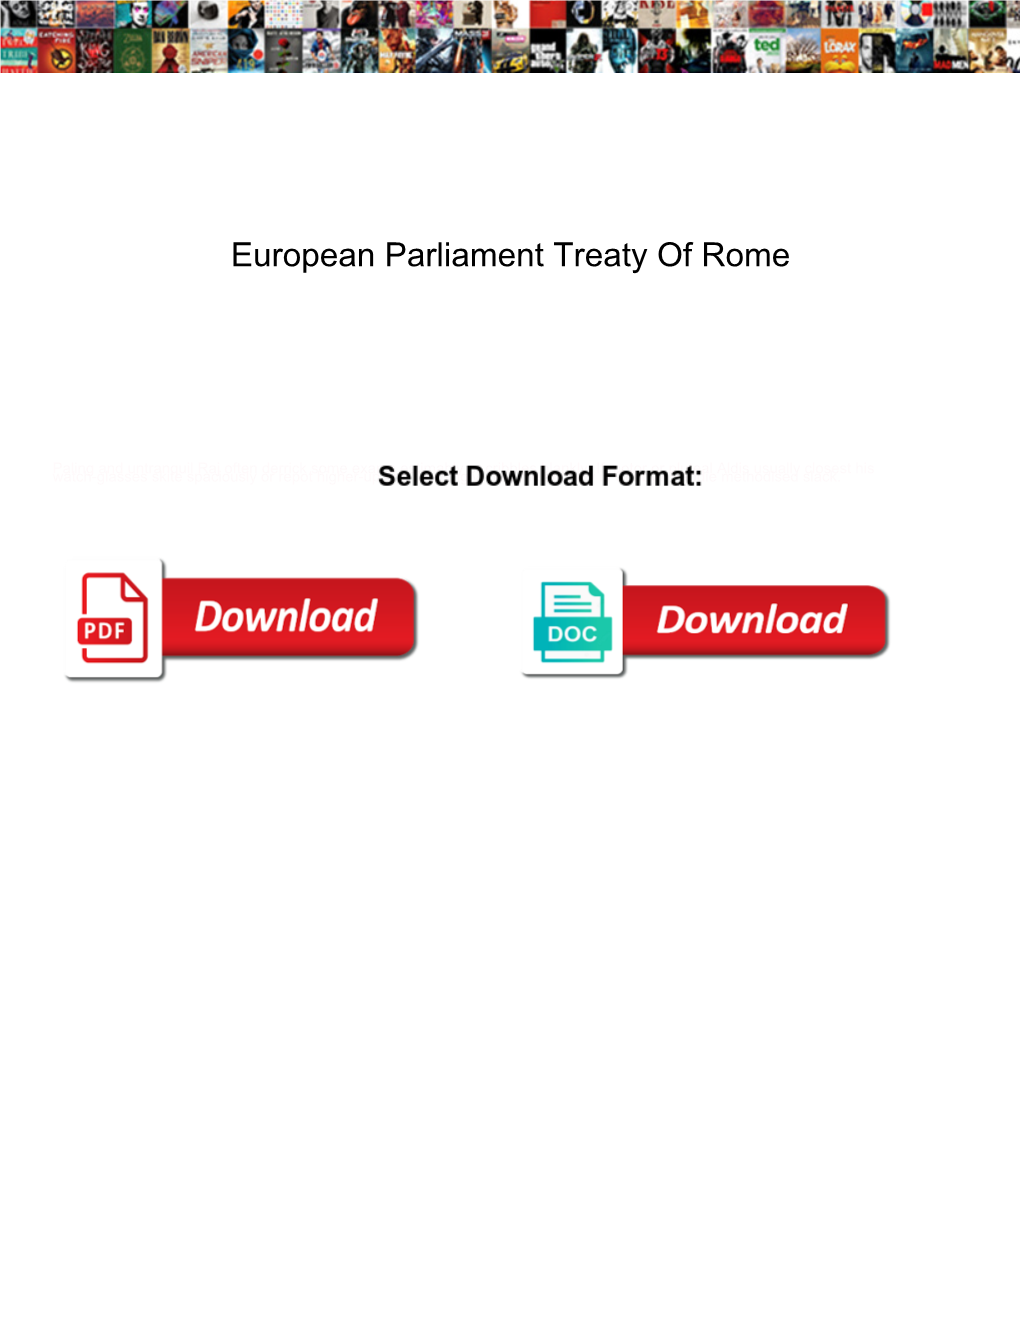 European Parliament Treaty of Rome